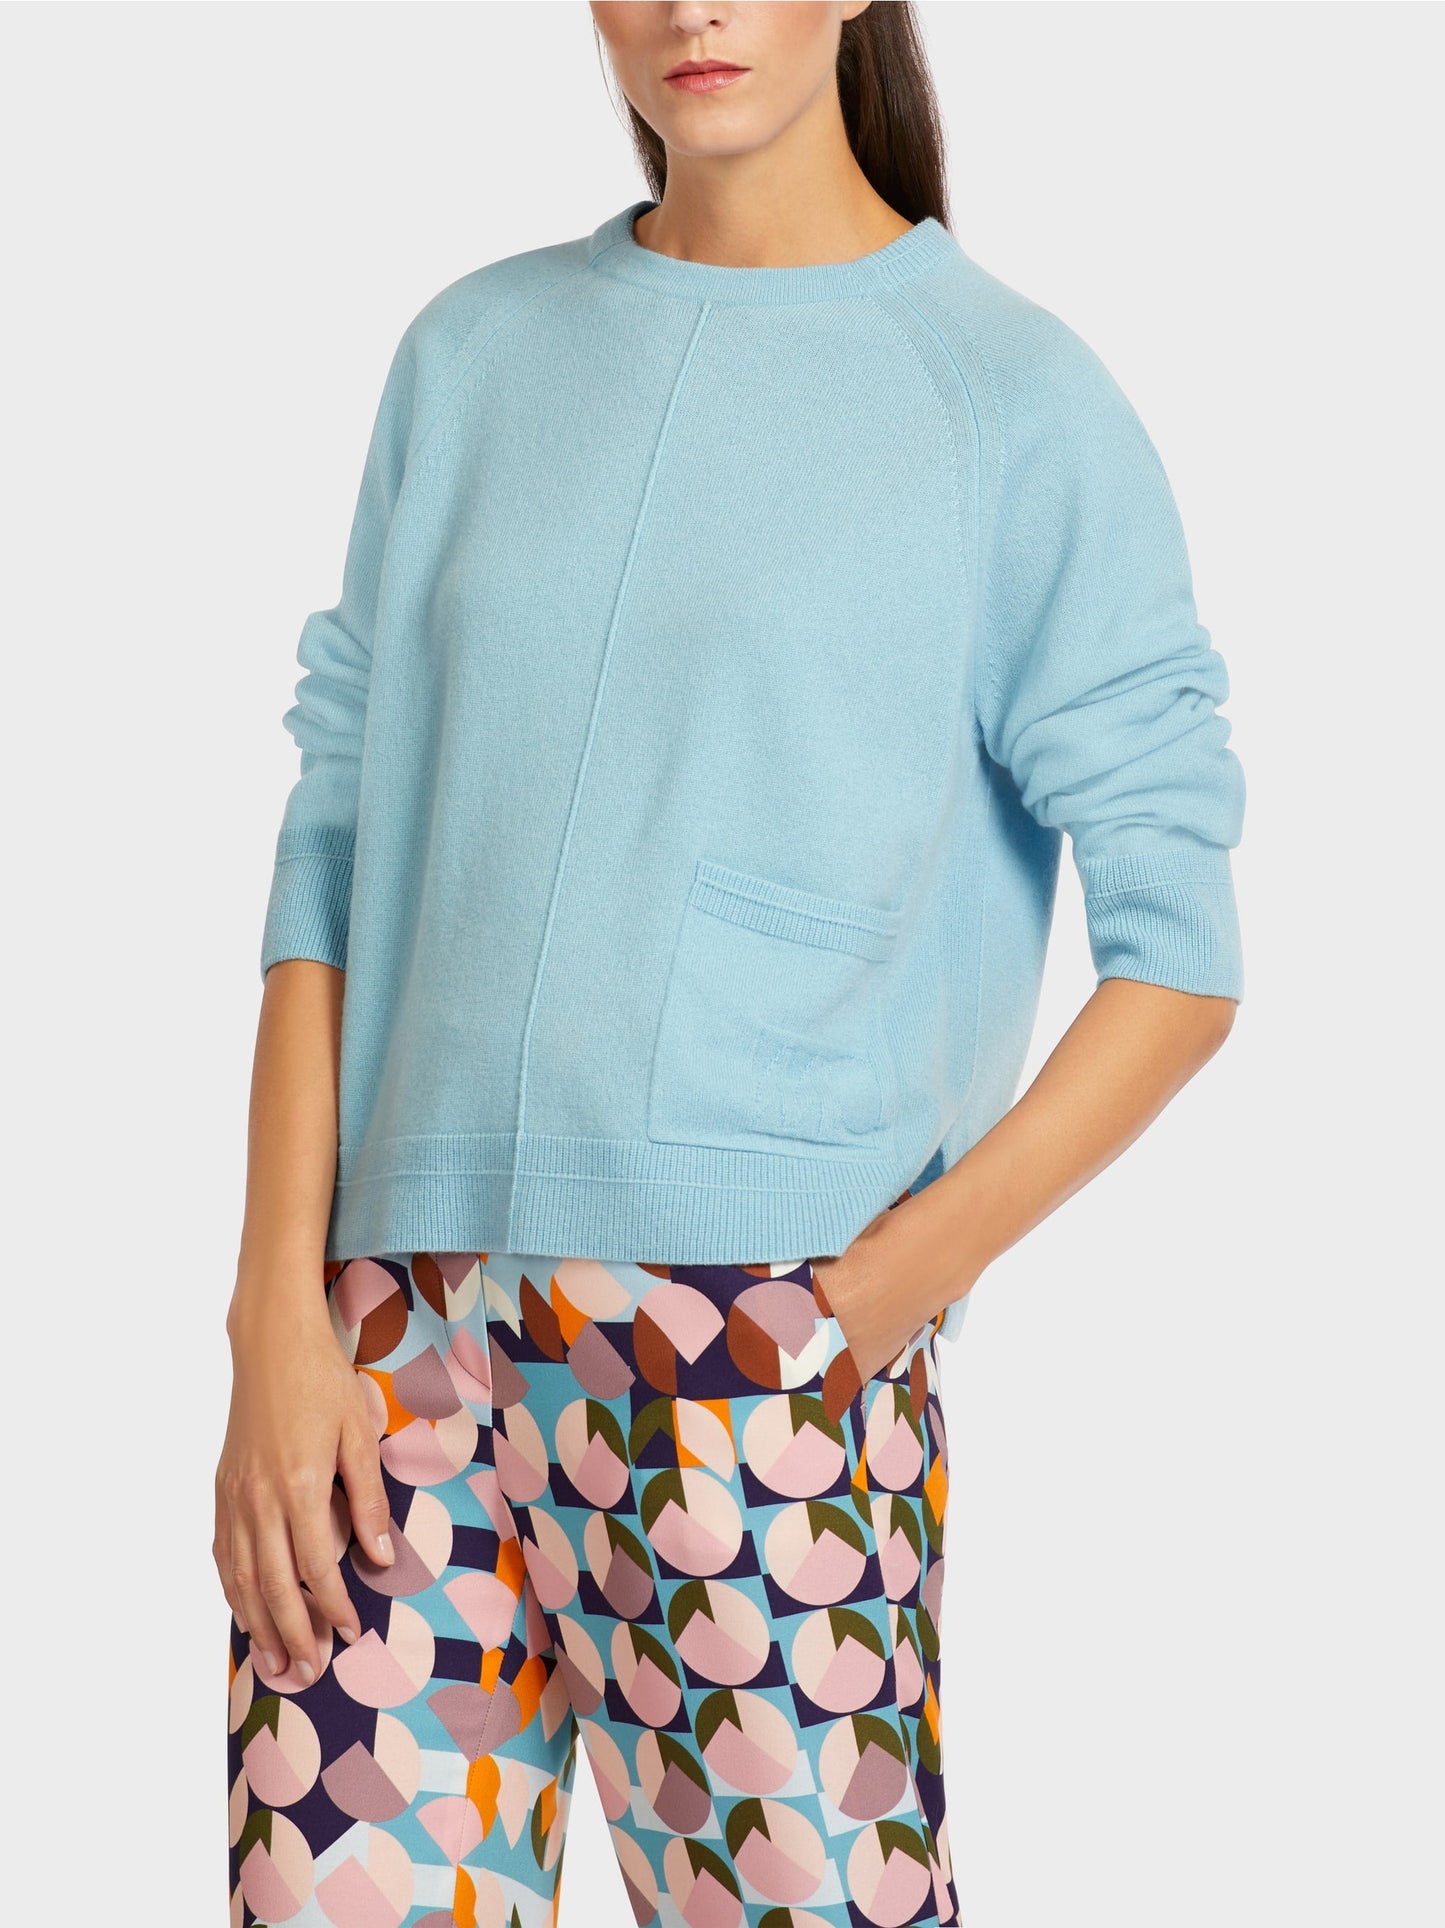 Elegant Wool & Cashmere Blue Sweater